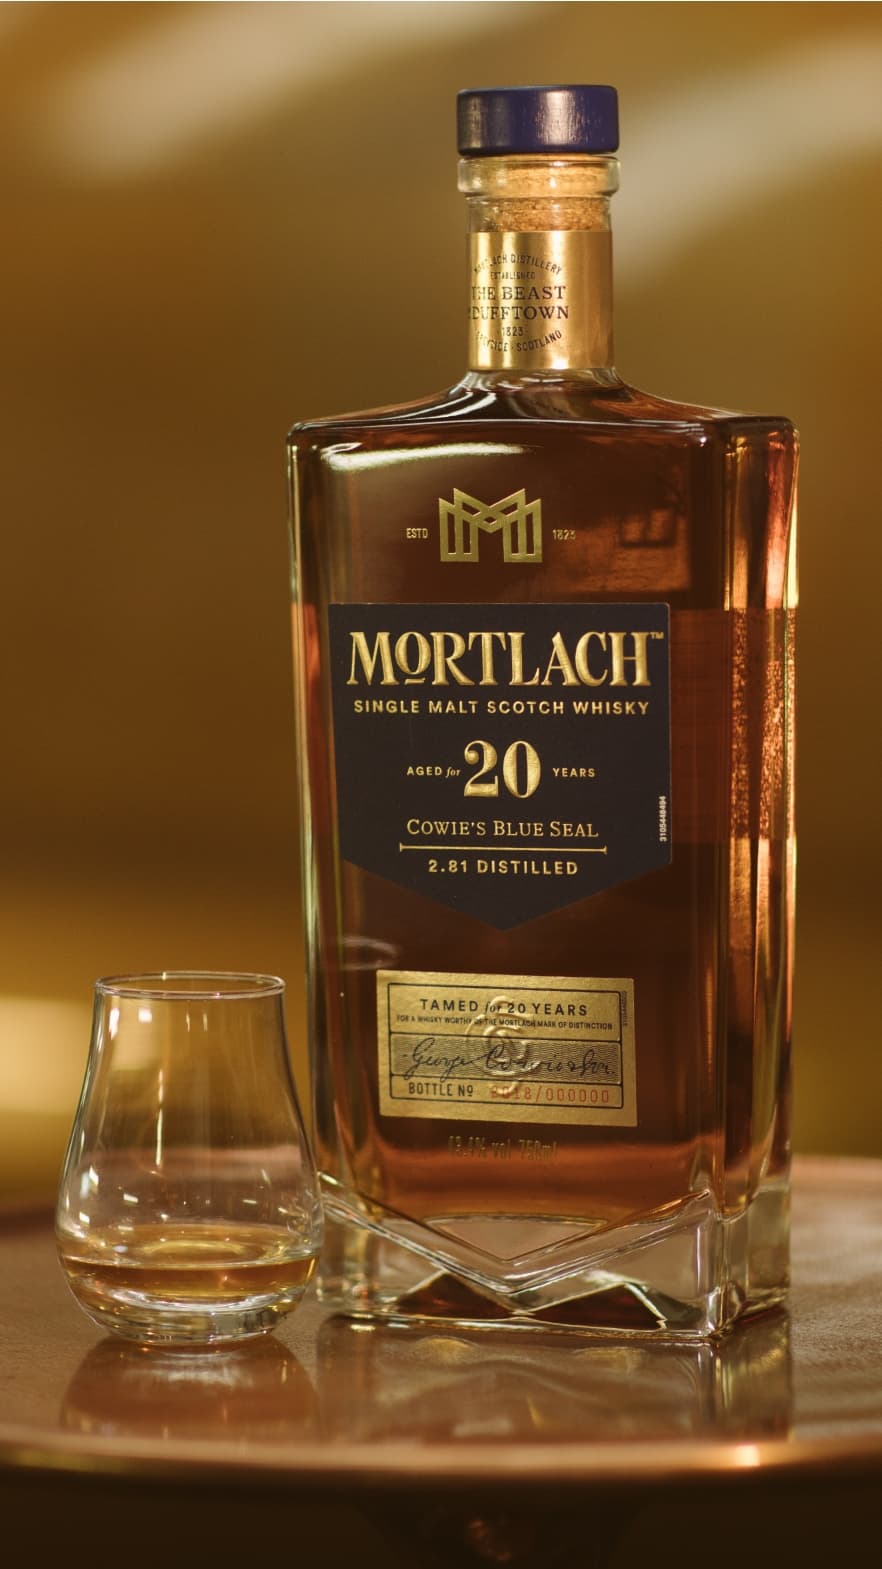 Mortlach 20 year Old bottle